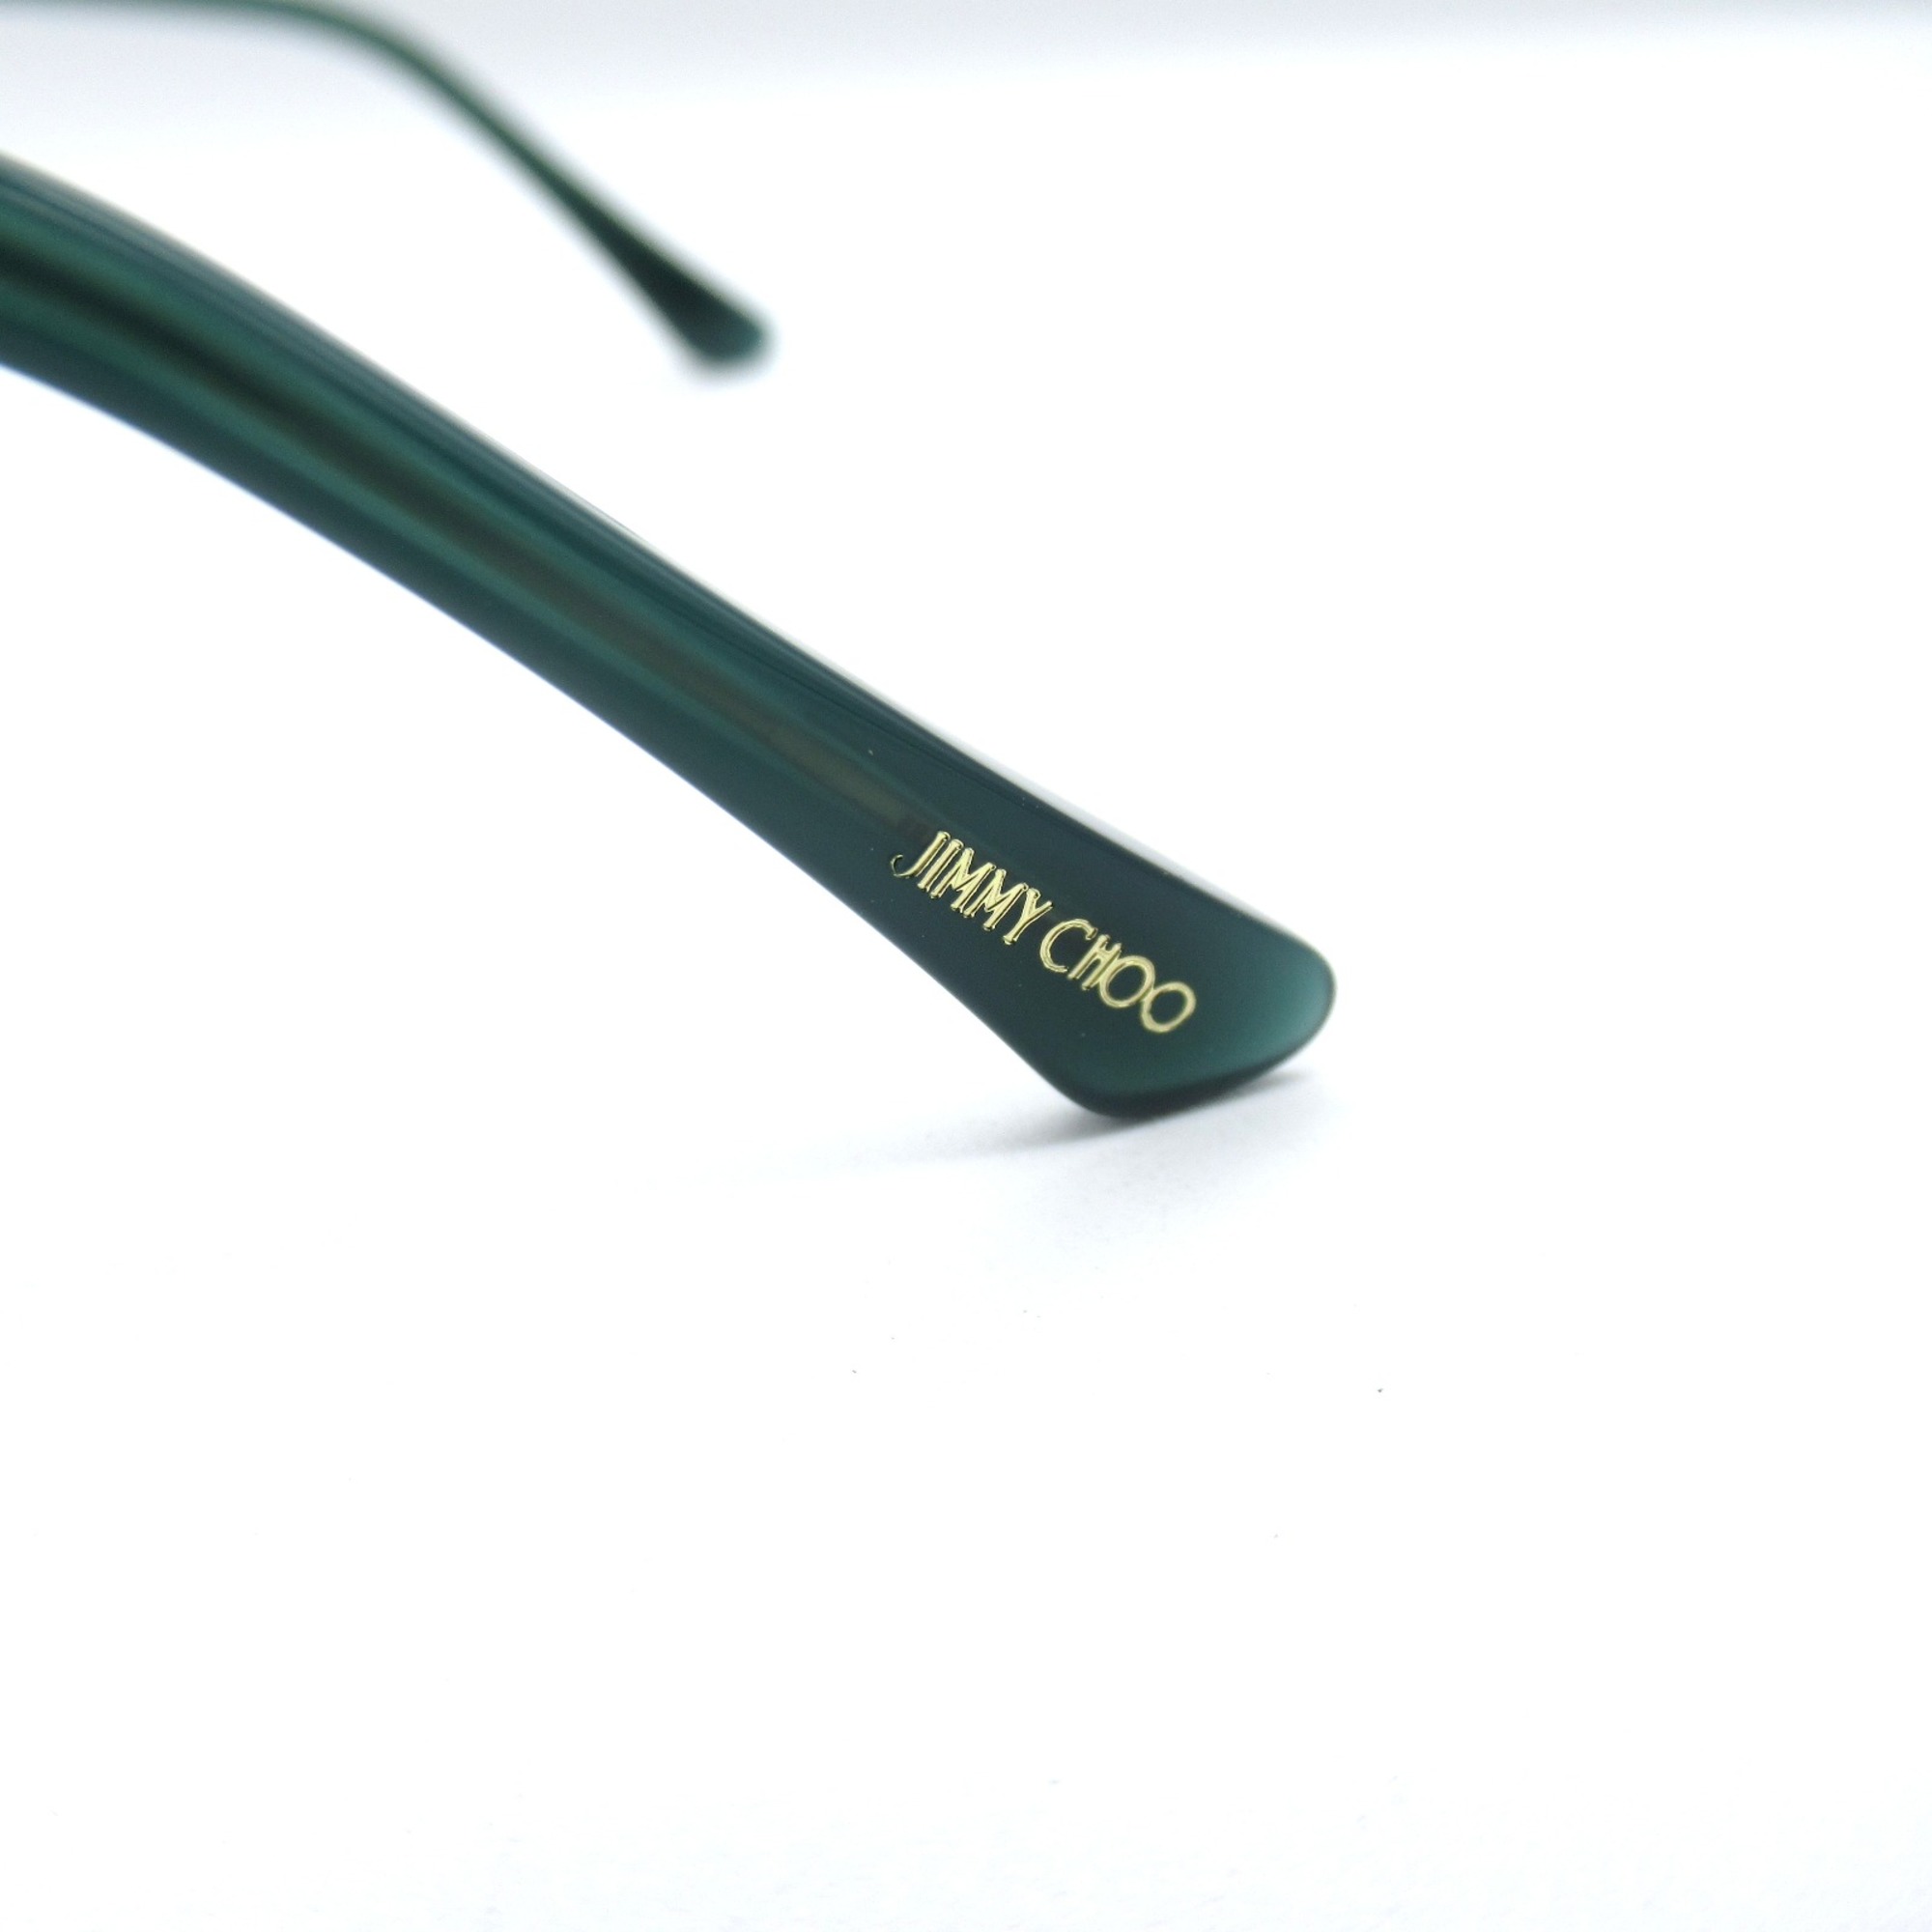 JIMMY CHOO sunglasses Gray Green Plastic TOTTA/G 1ED/IR